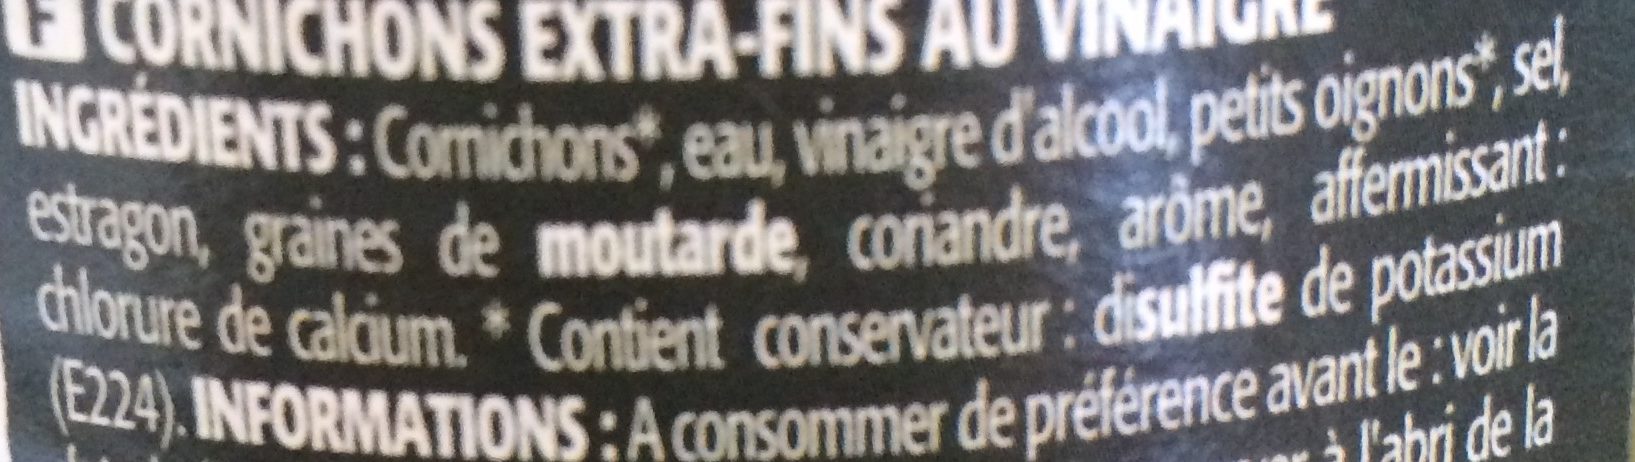 Les cornichons extra-fins - Ingrediënten - fr